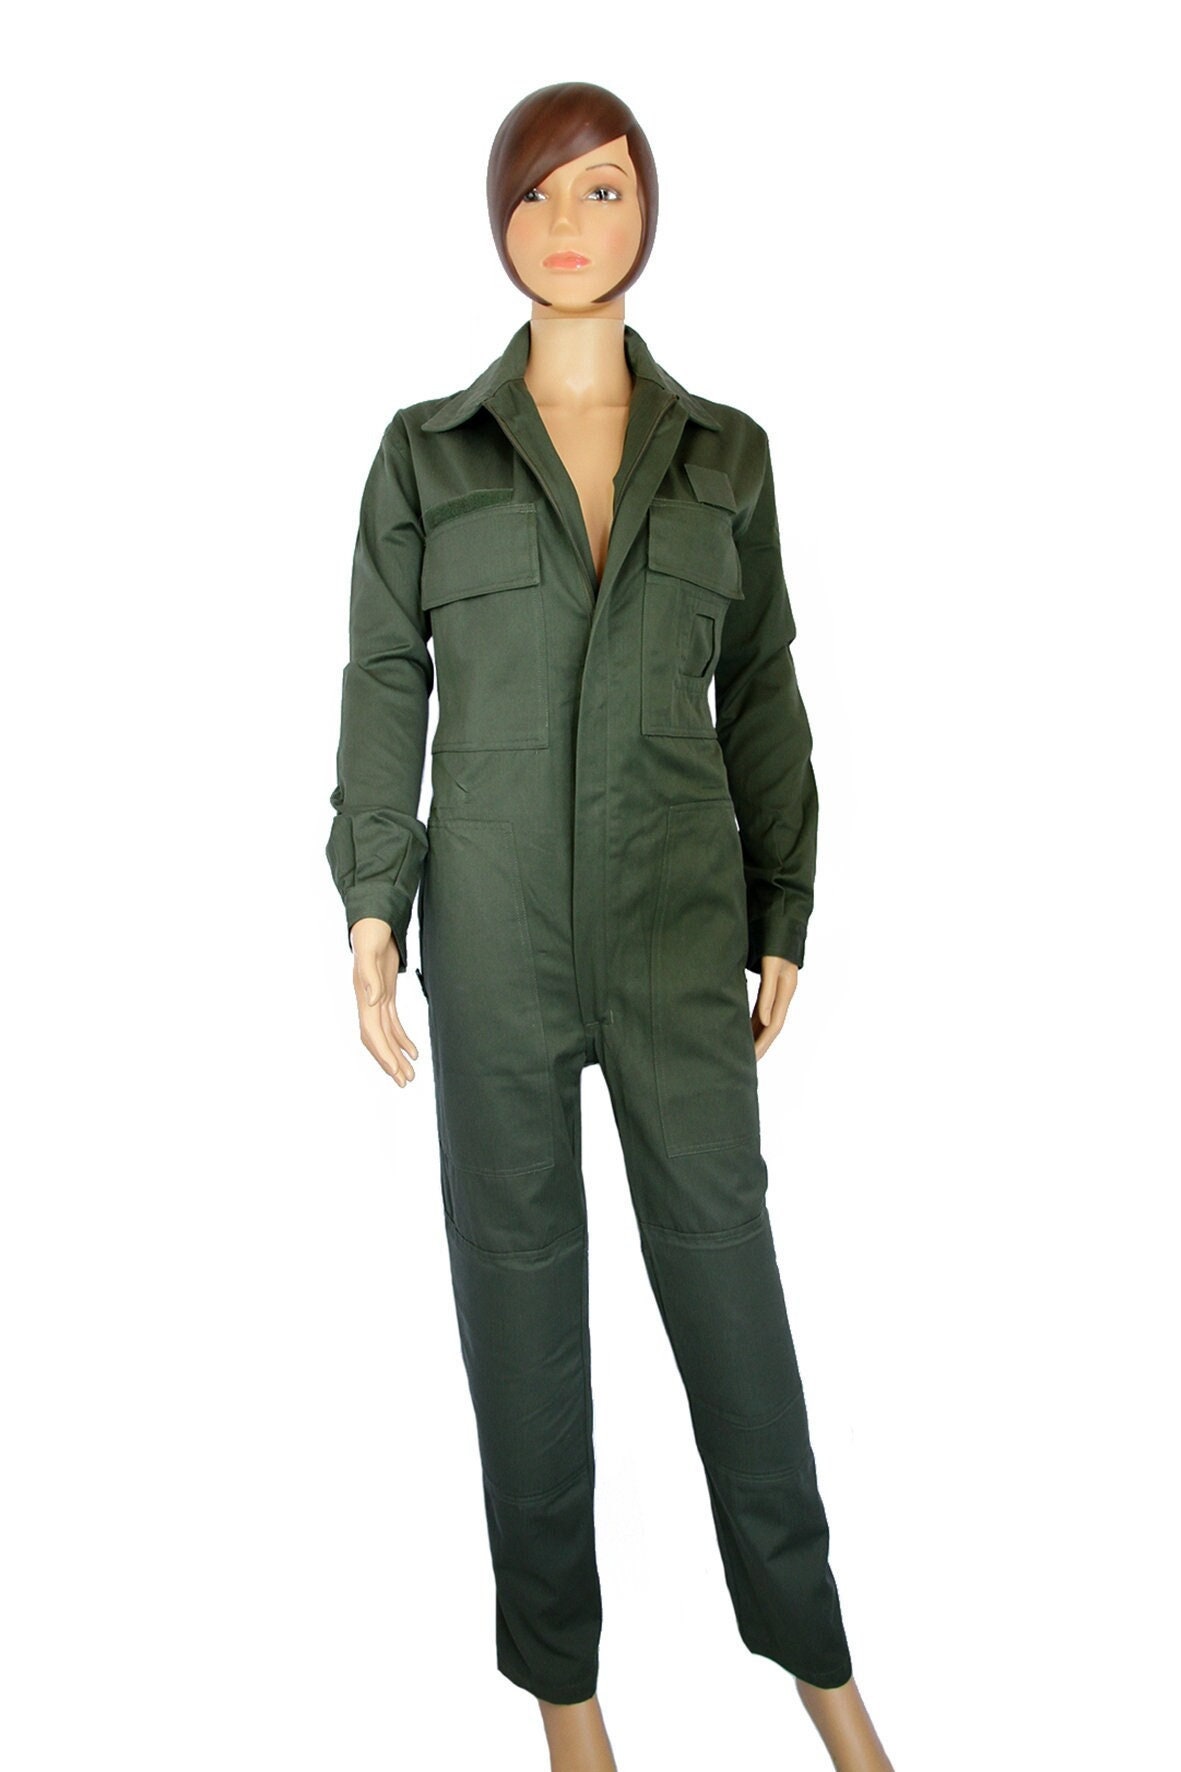 Female Combat Uniform, Overalls Suit, Clothing Set